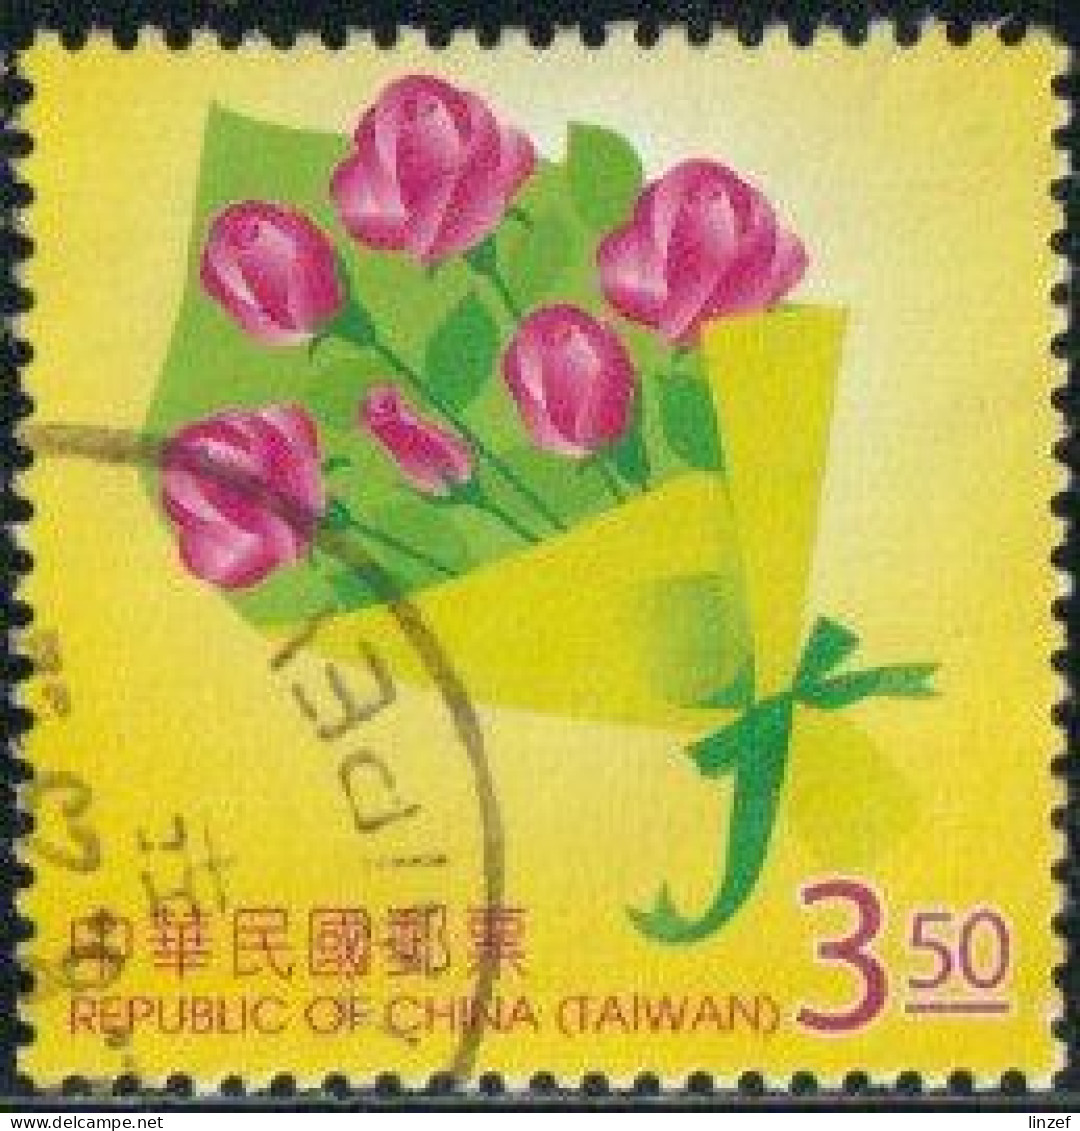 Taïwan 2009 Yv. N°3234 - Bouquet De Roses - Oblitéré - Usados